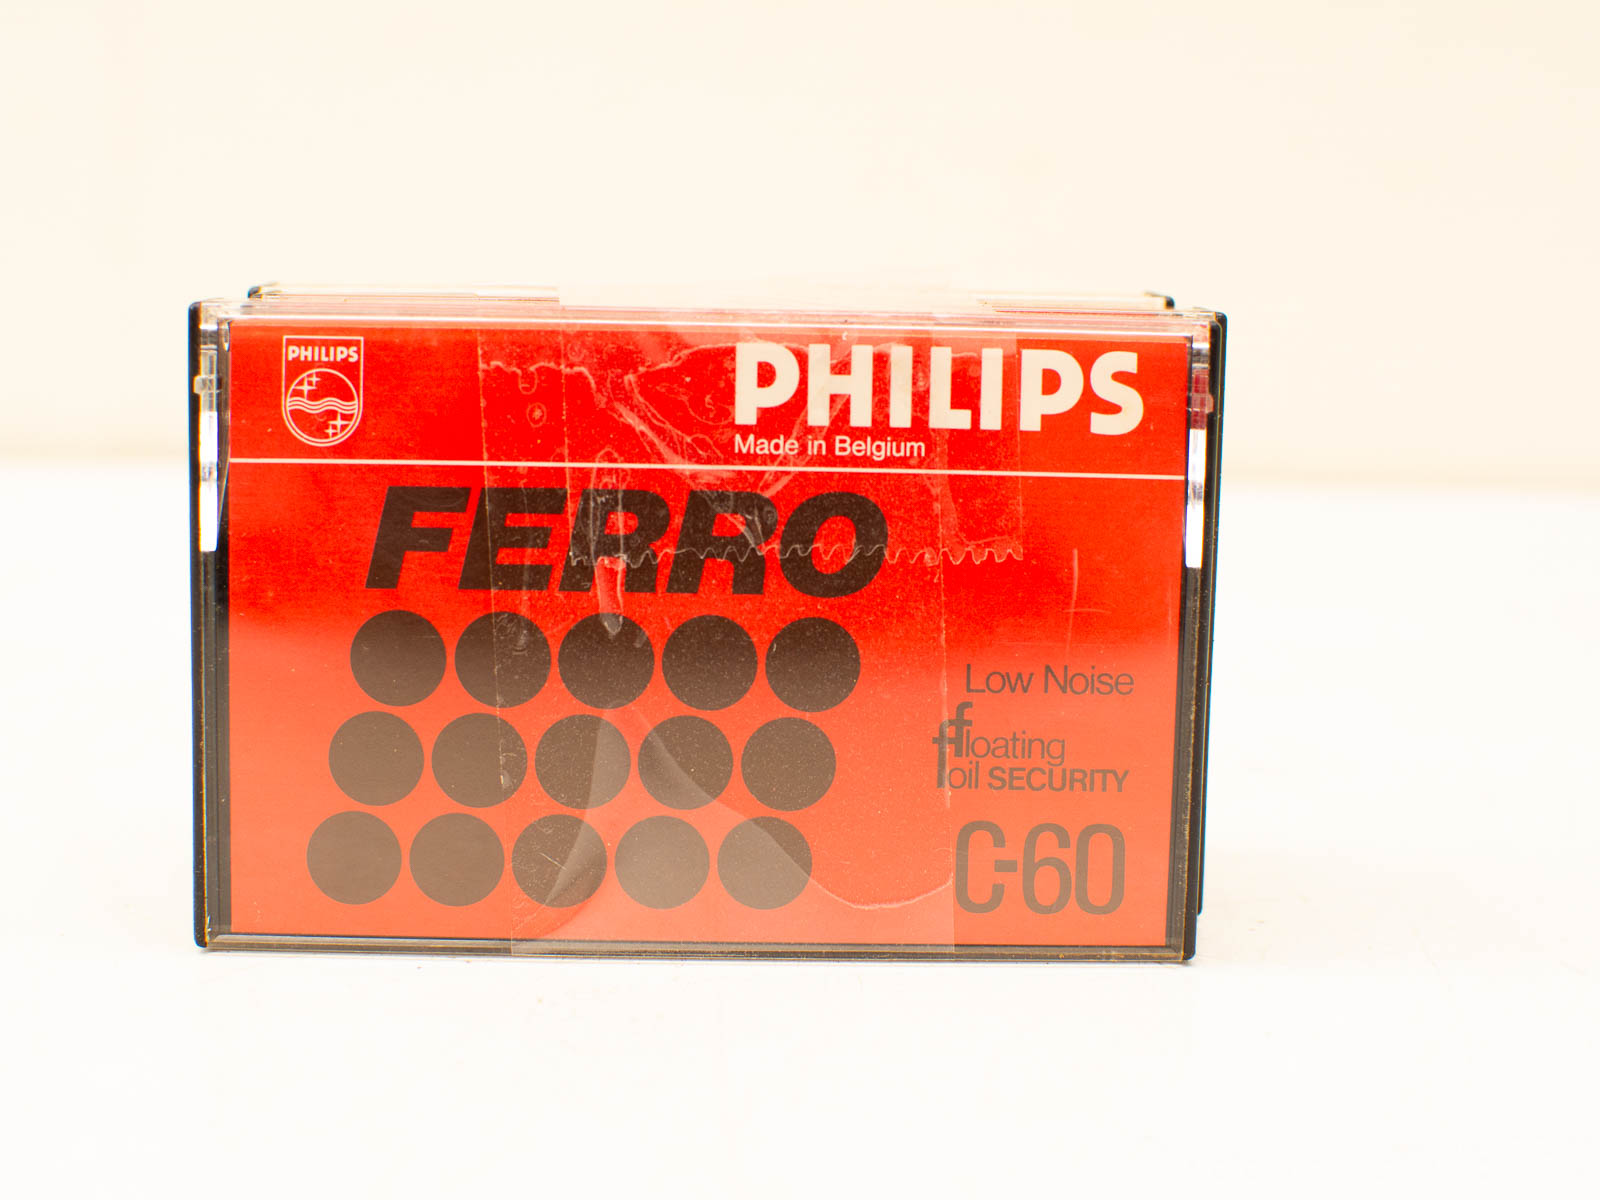 3 Philips cassettebandjes  30563